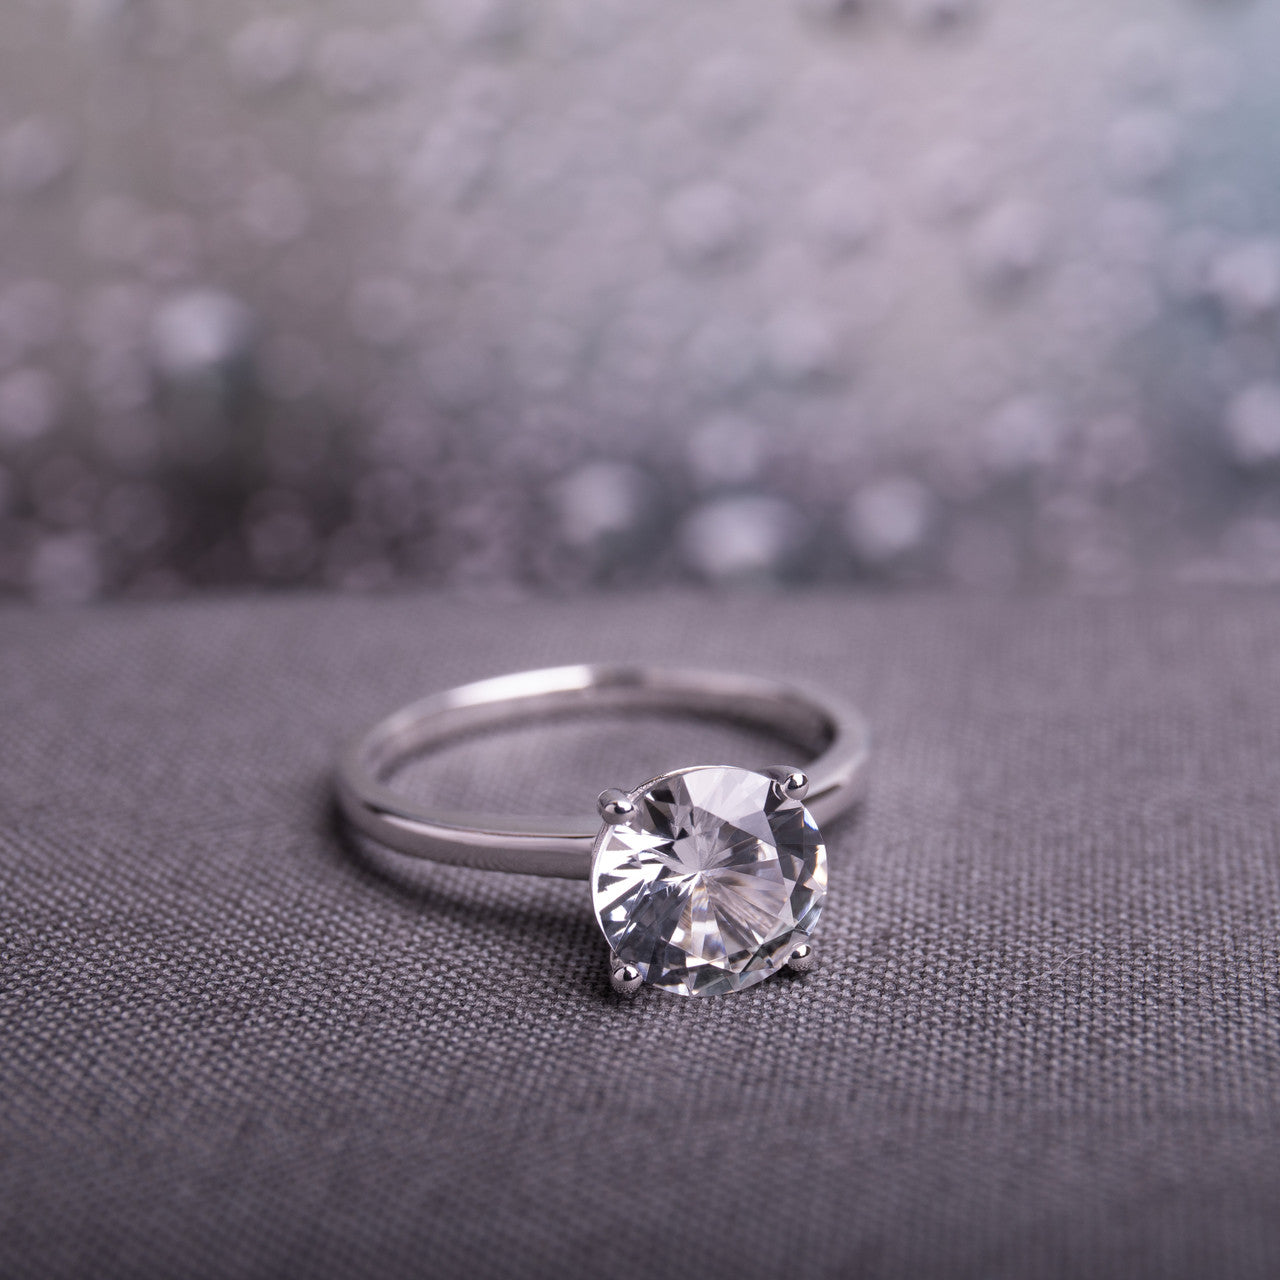 Ice Jewellery 2 1/5 Carat Created White Sapphire Engagement Ring in 10K White Gold - 7500694609 | Ice Jewellery Australia